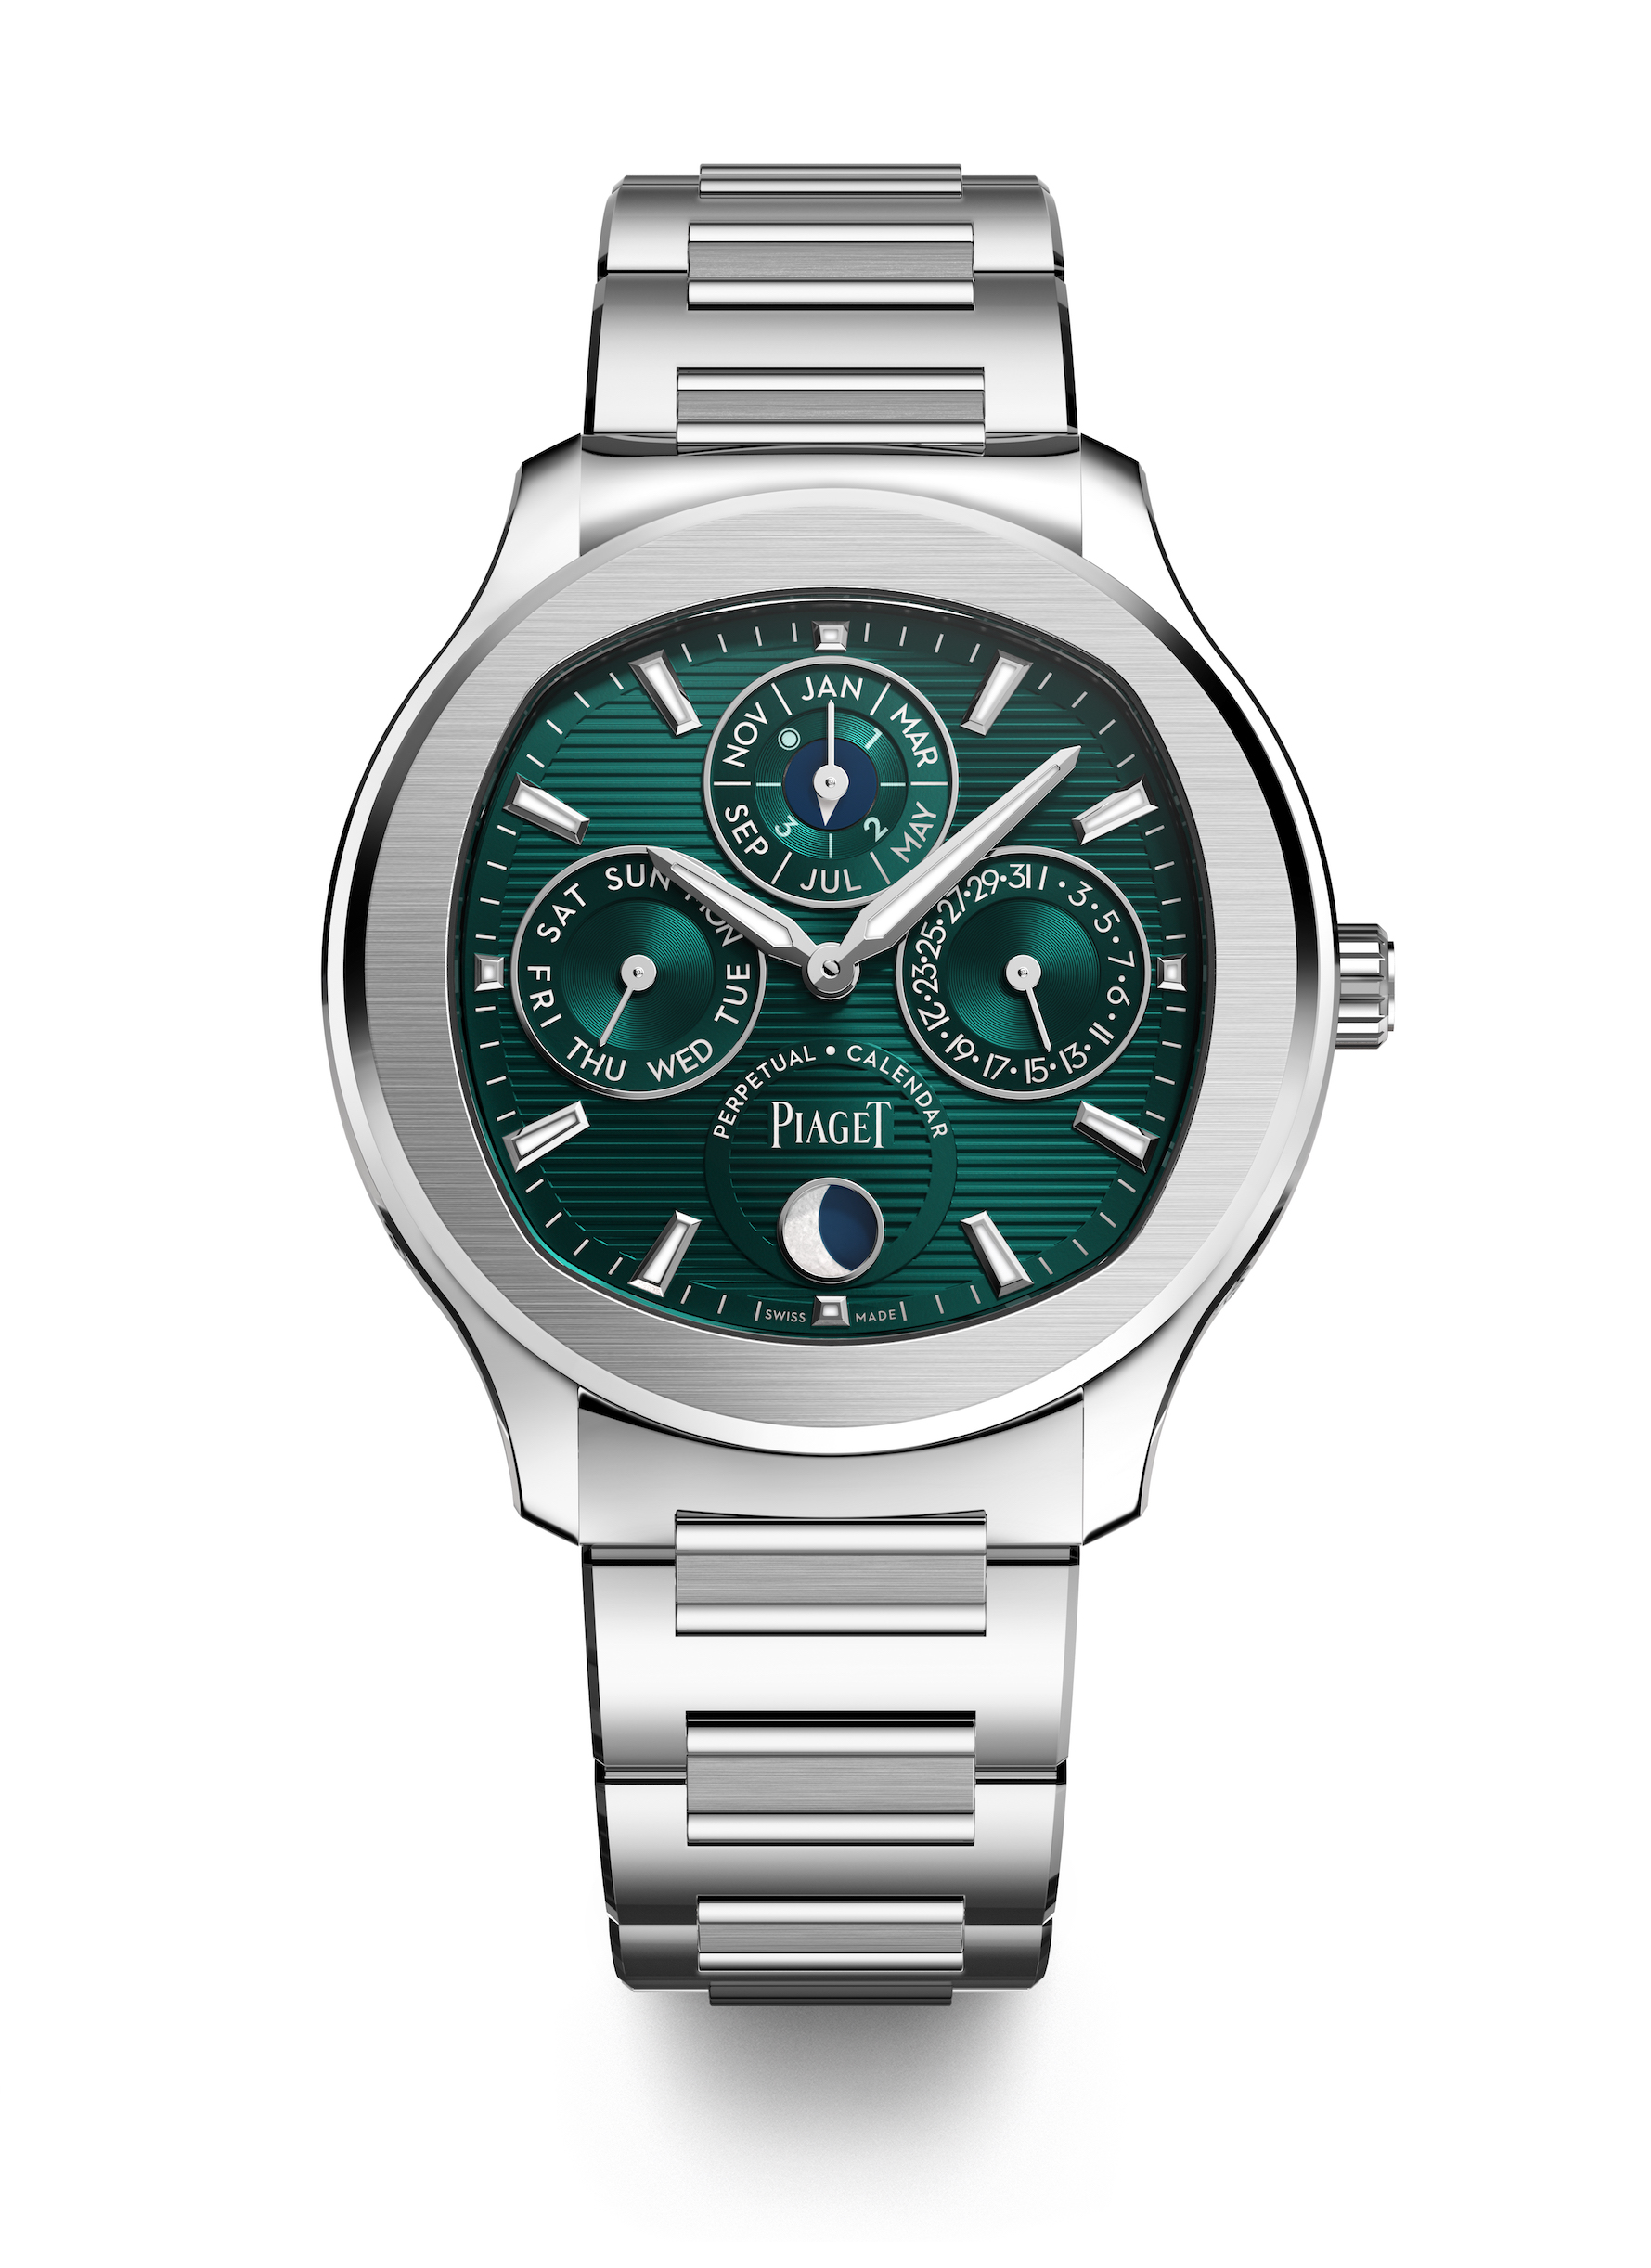 Piaget Polo Perpetual Calendar Ultra-Thin watch.